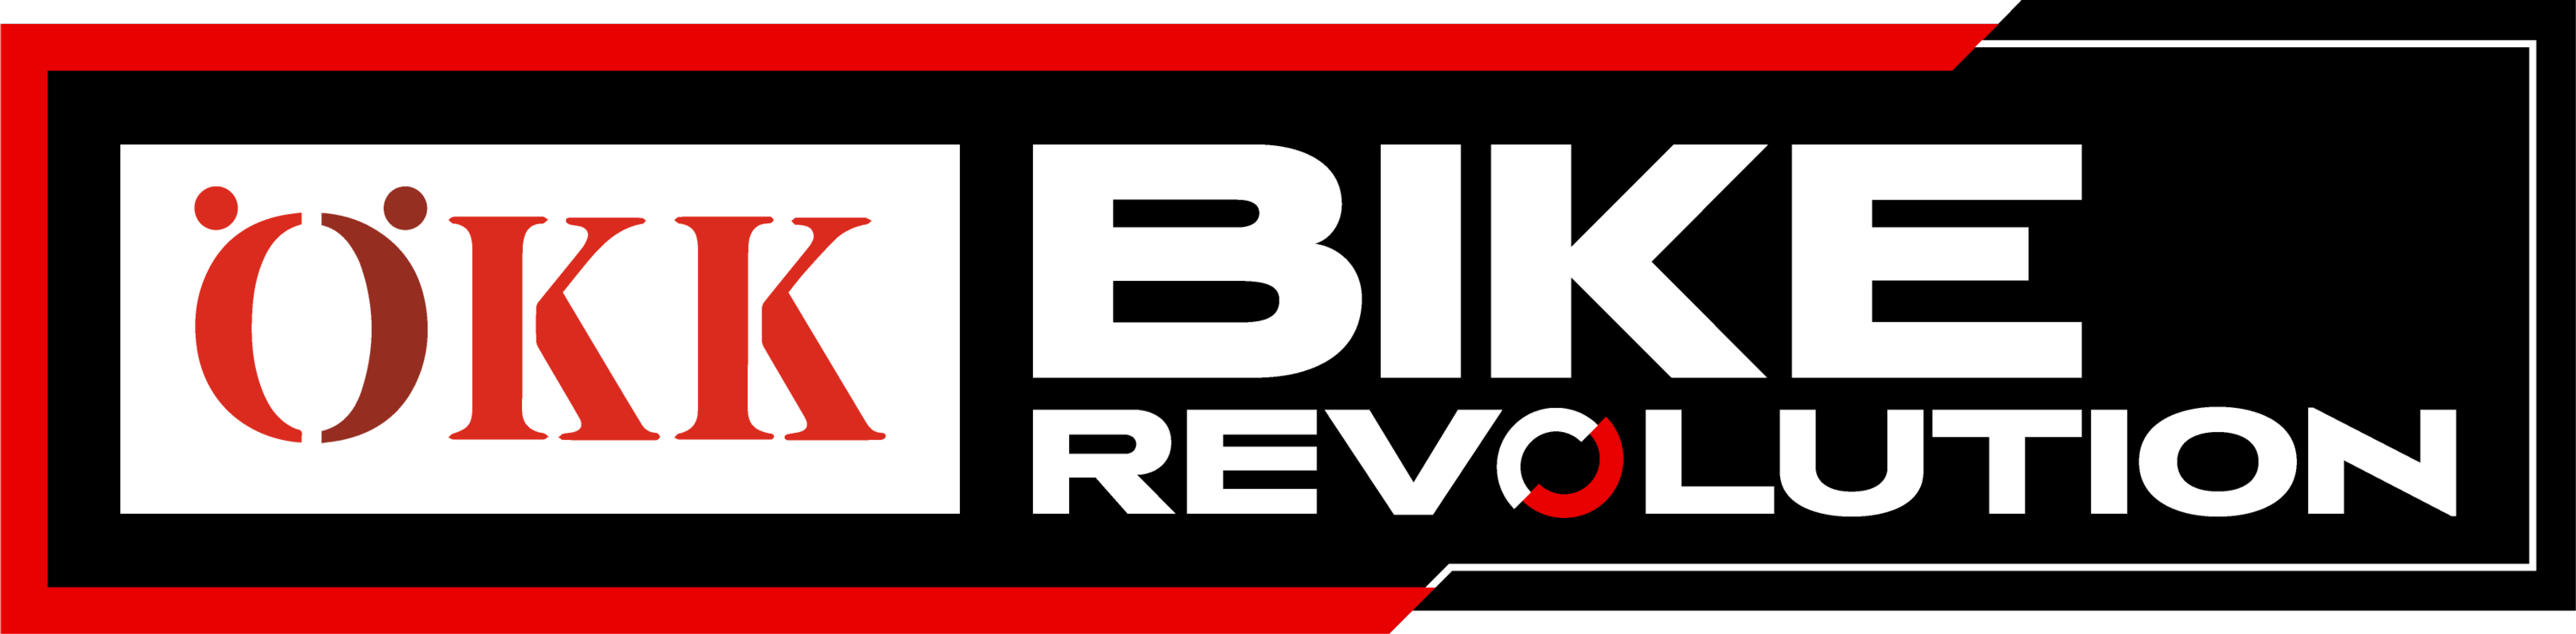 ÖKK BIKE REVOLUTION Logo